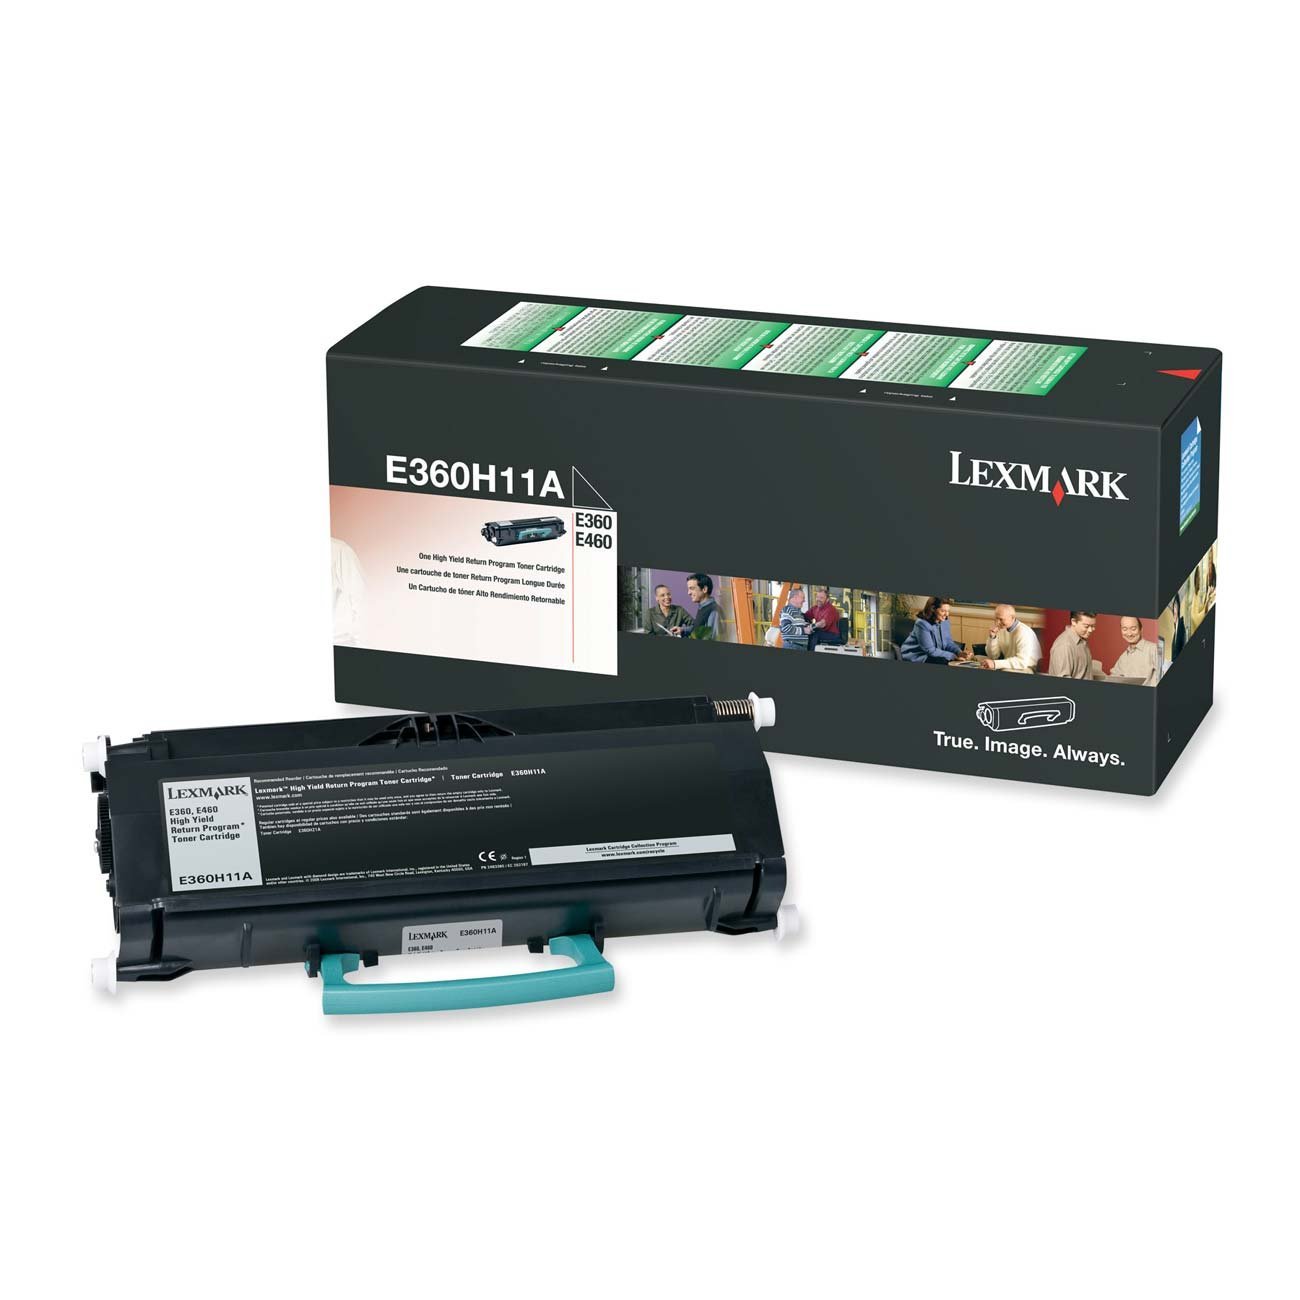 Absolute Toner Lexmark Products E360H11A Original Genuine OEM High Yield Black Toner Cartridge Original Lexmark Cartridges